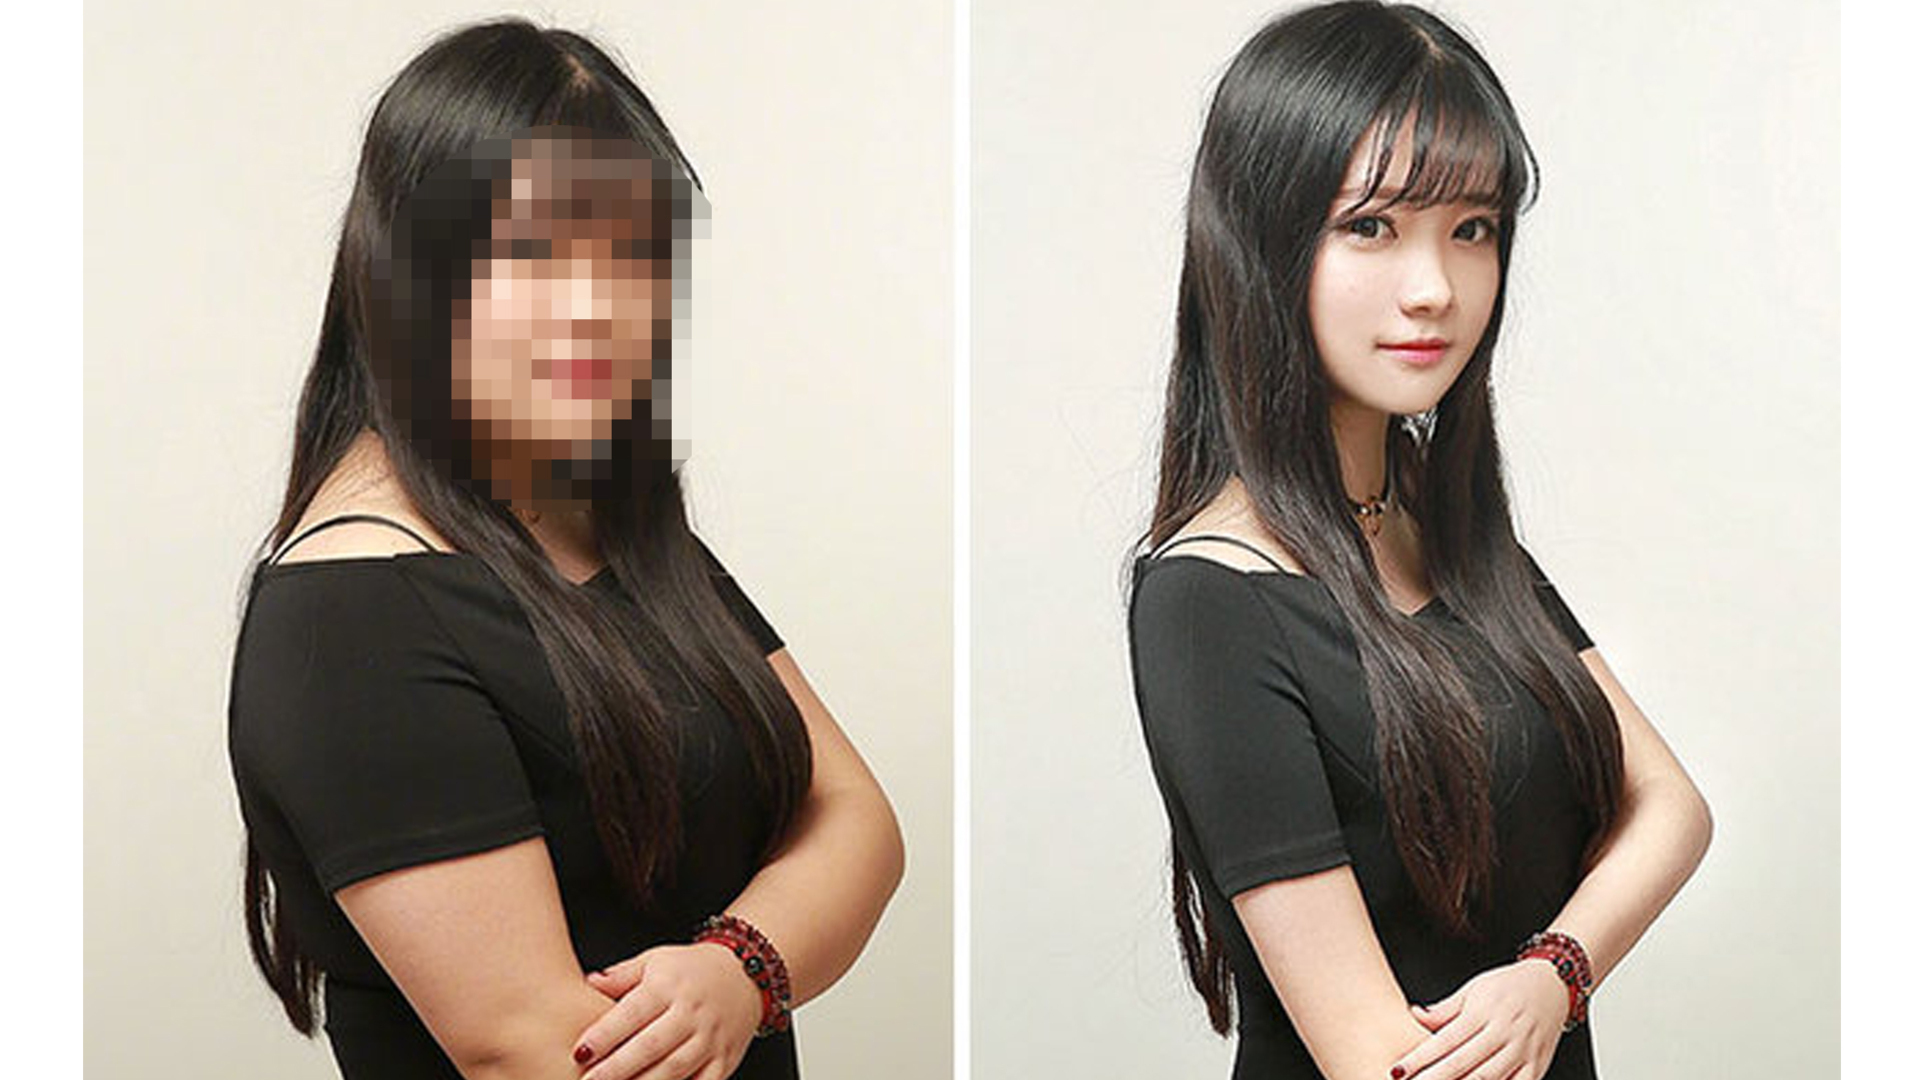 До и после. Фотошоп девушки до и после. Кореянки без фотошопа. Девушка до фотошопа. До после фотошоп фотосессия.